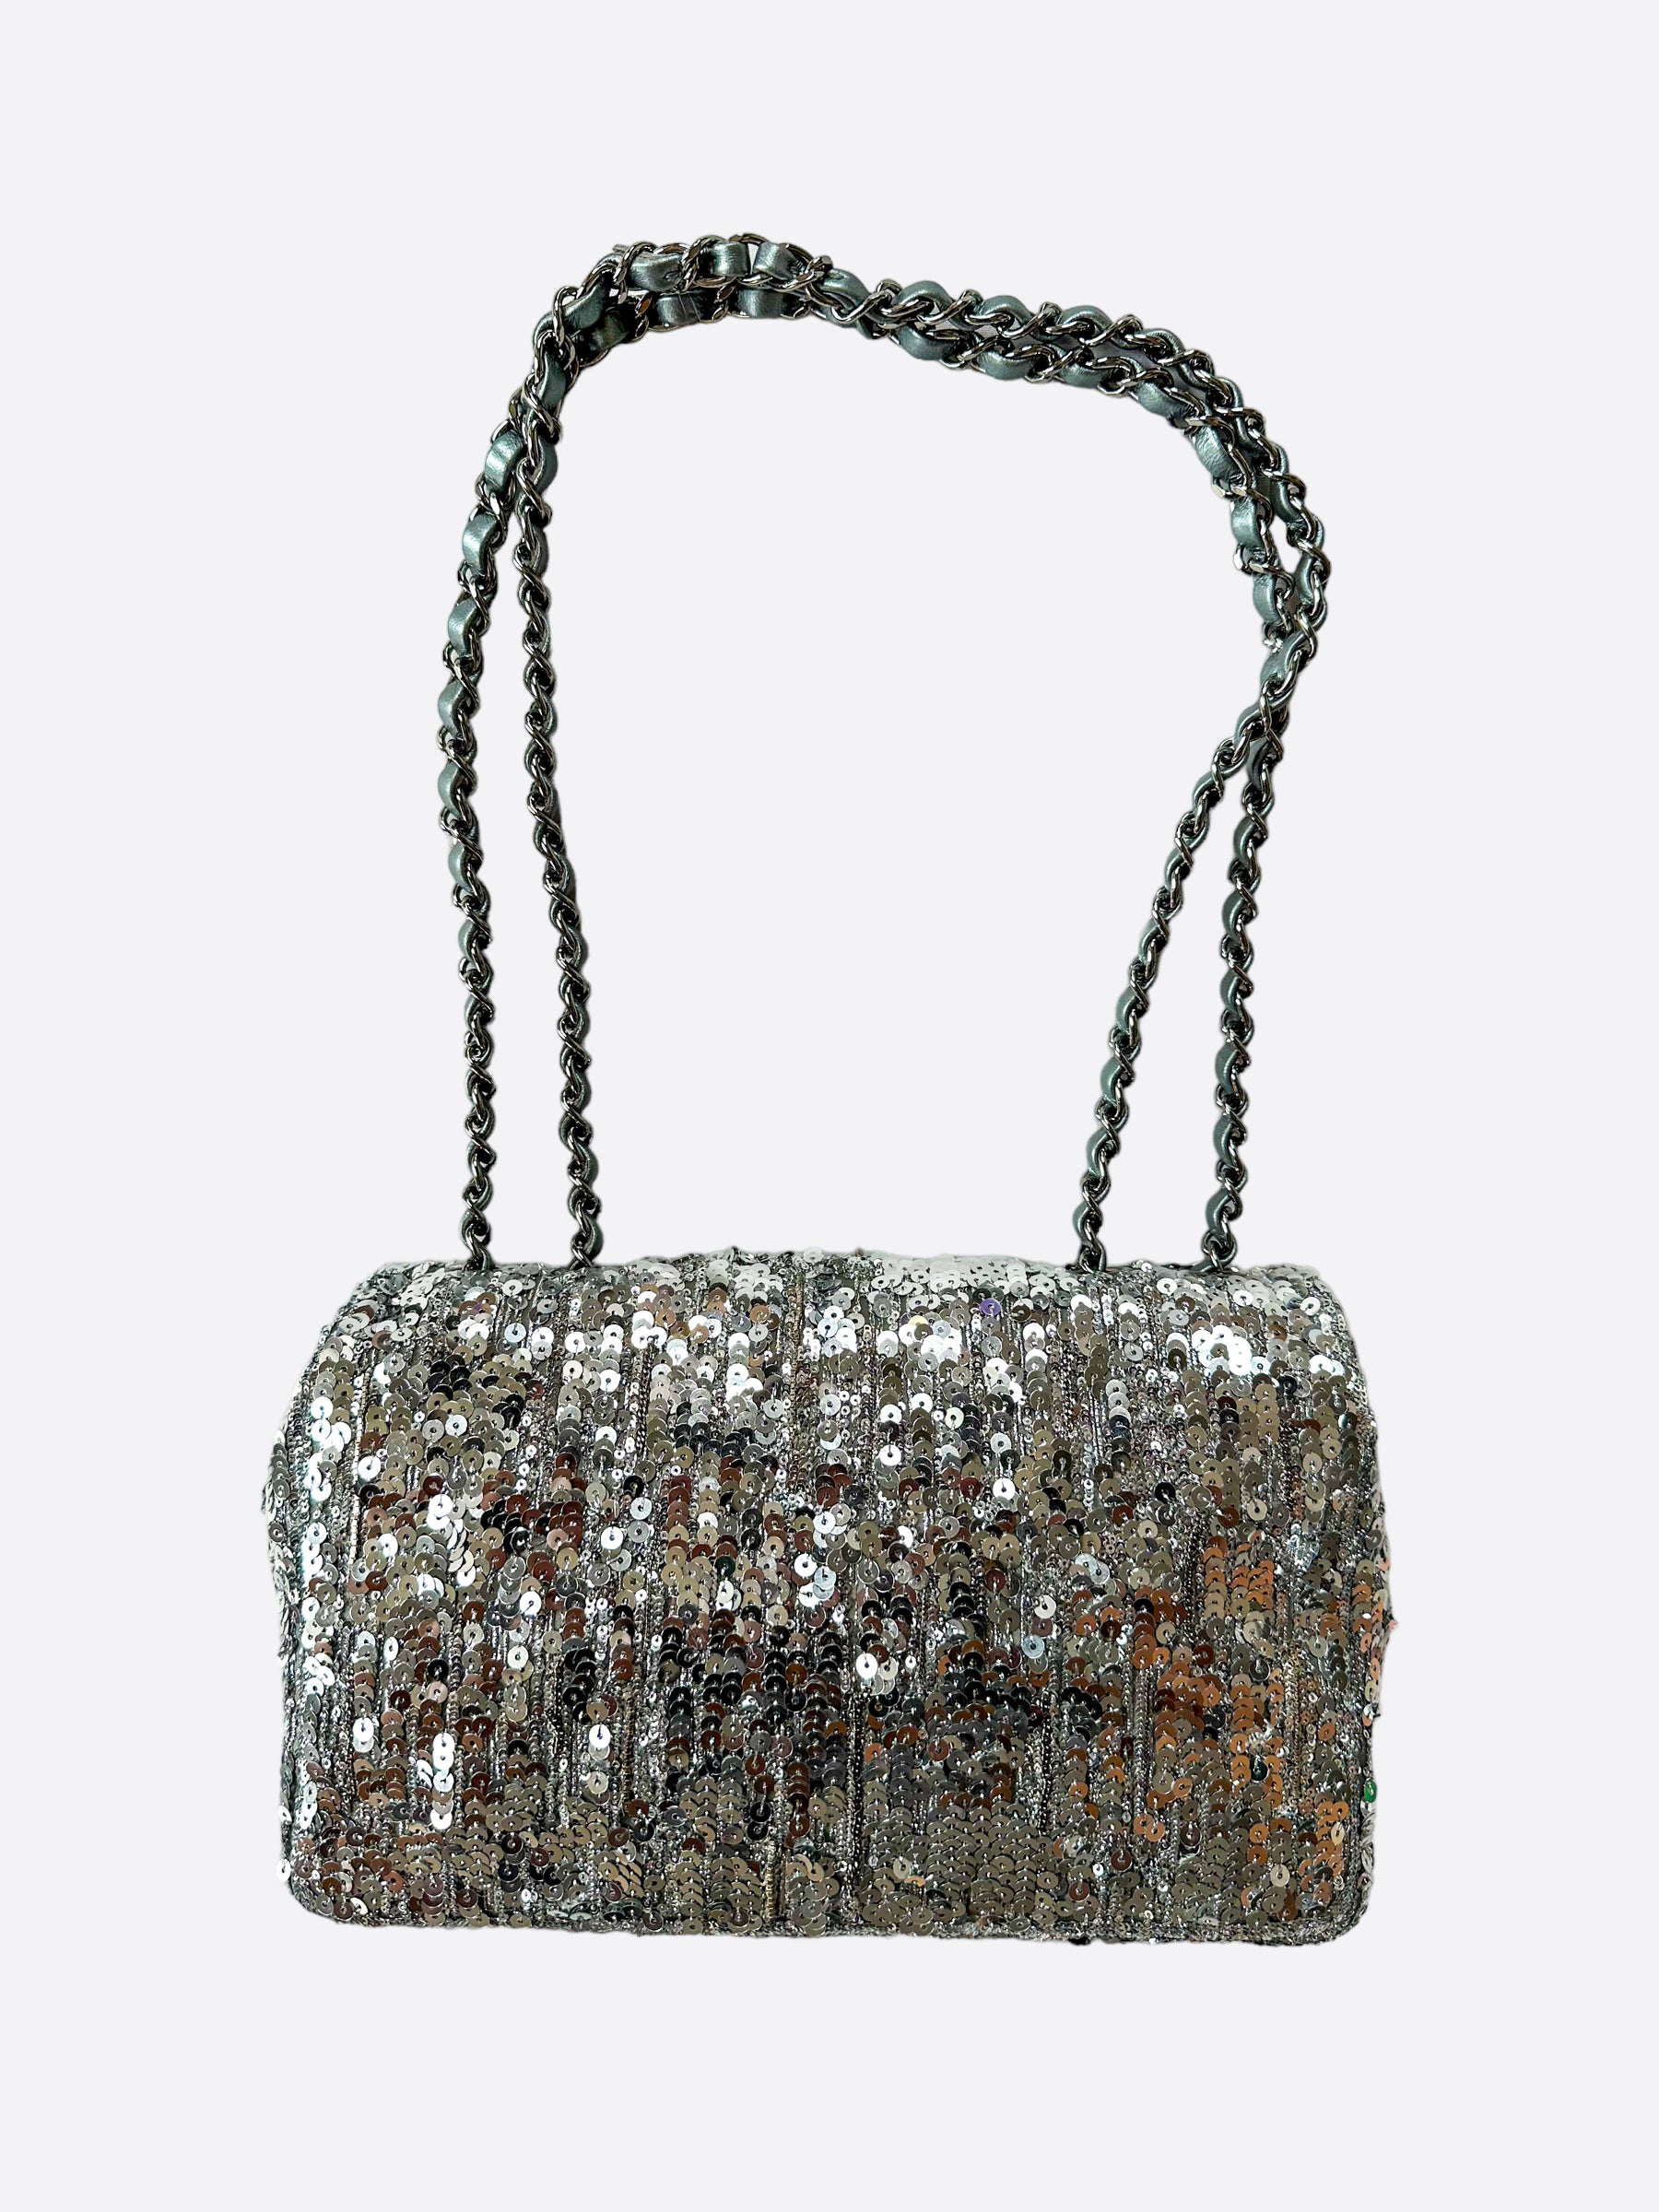 Chanel Silver Sequin Medium Flap Bag